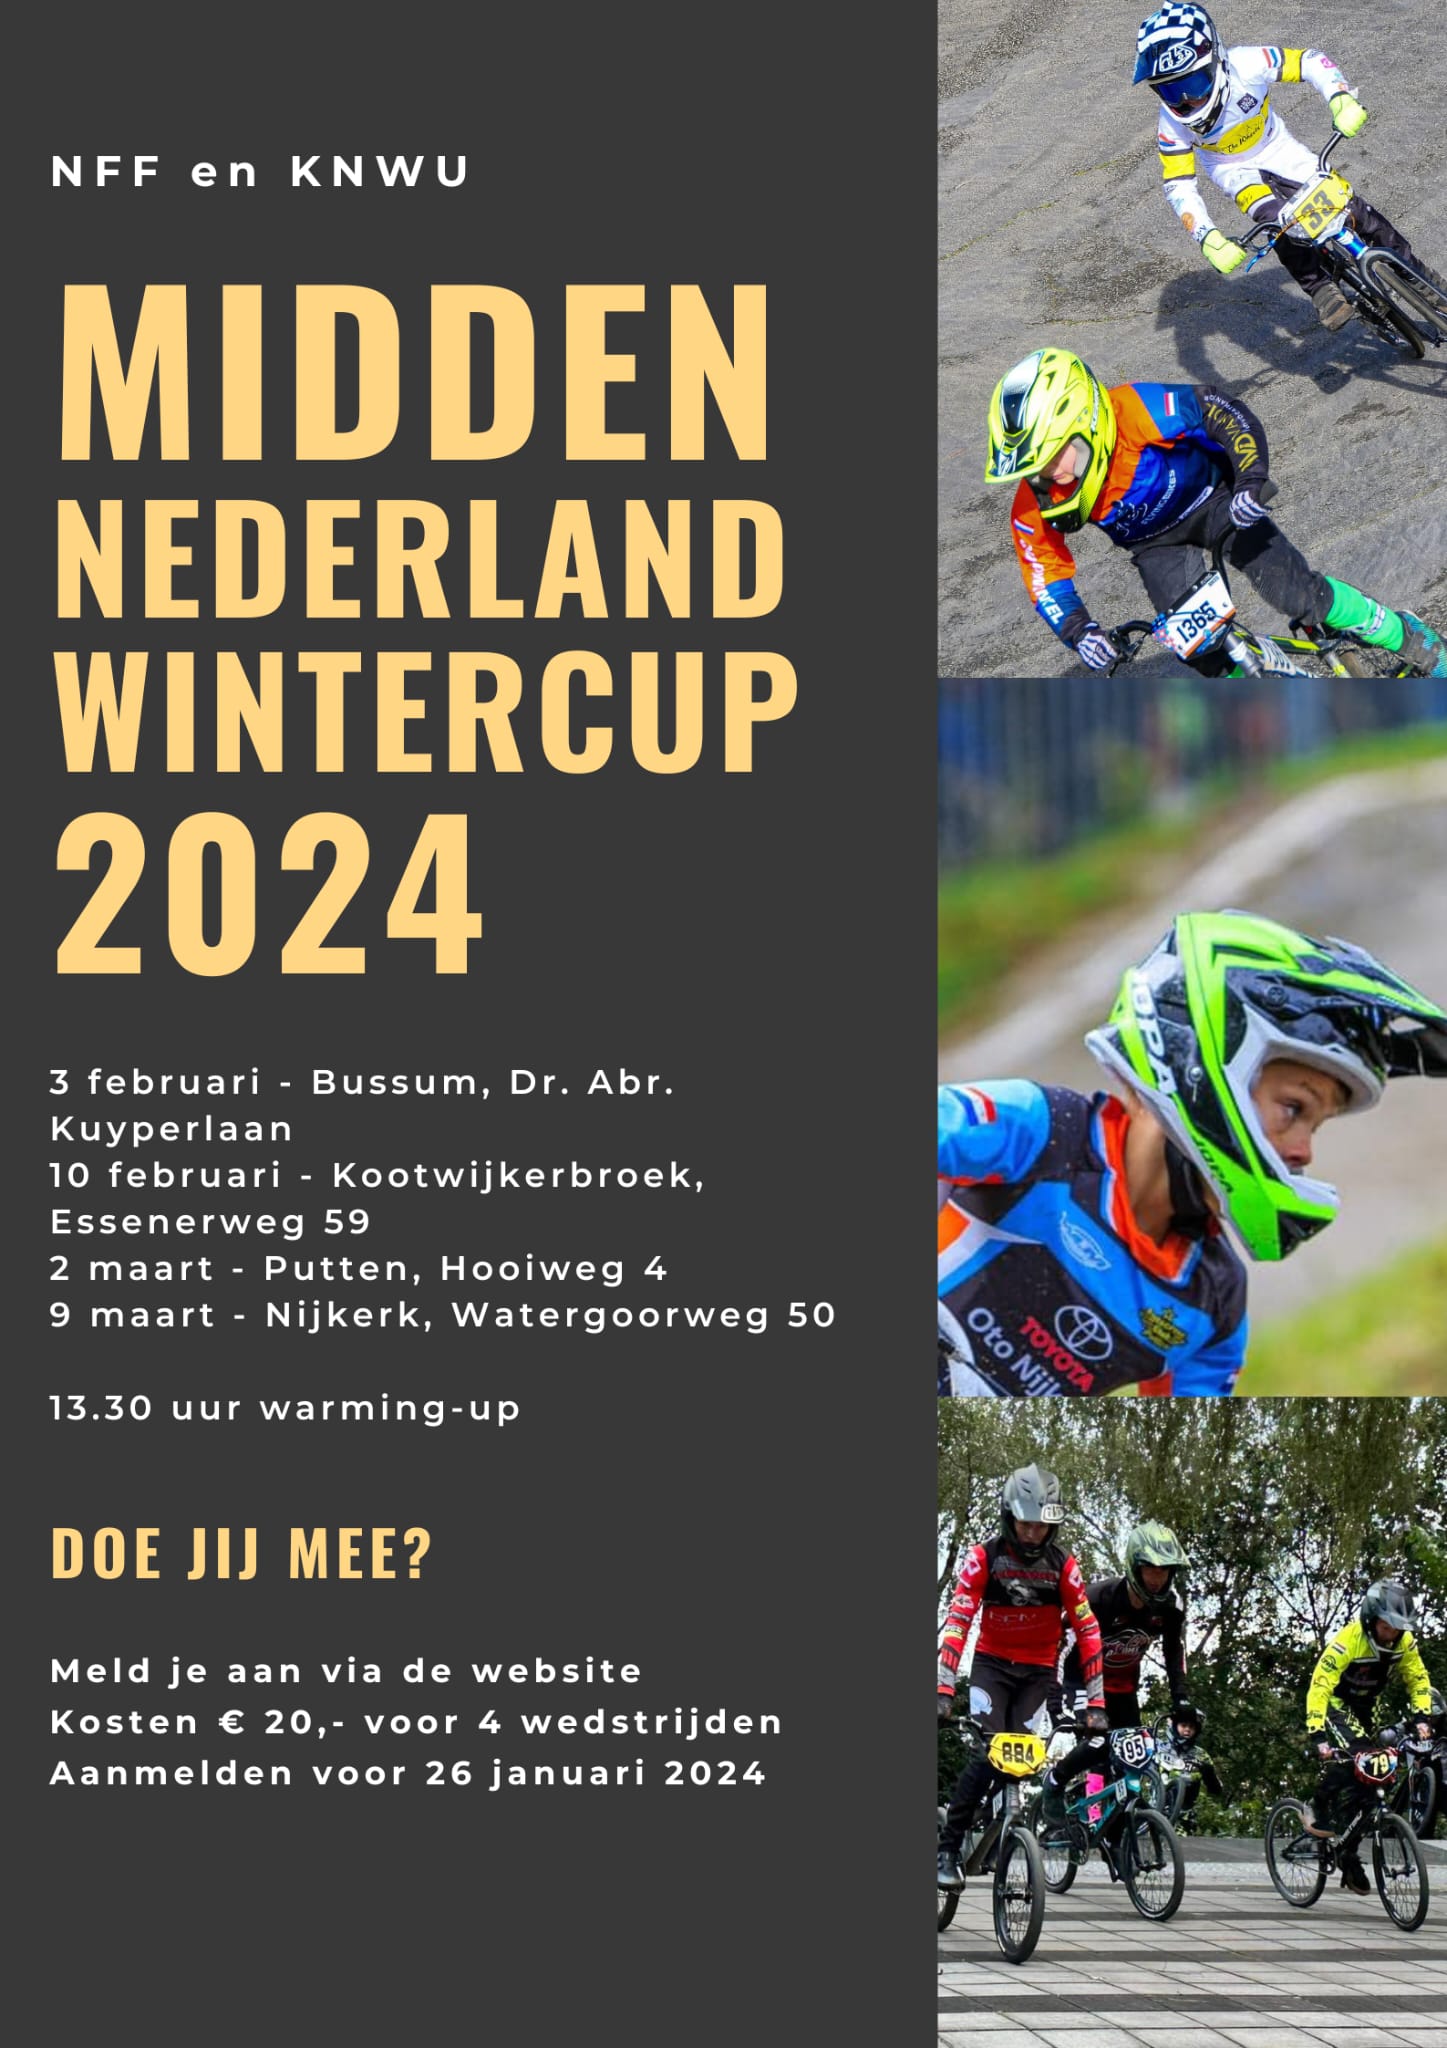 Midden Nederland Wintercup 2024